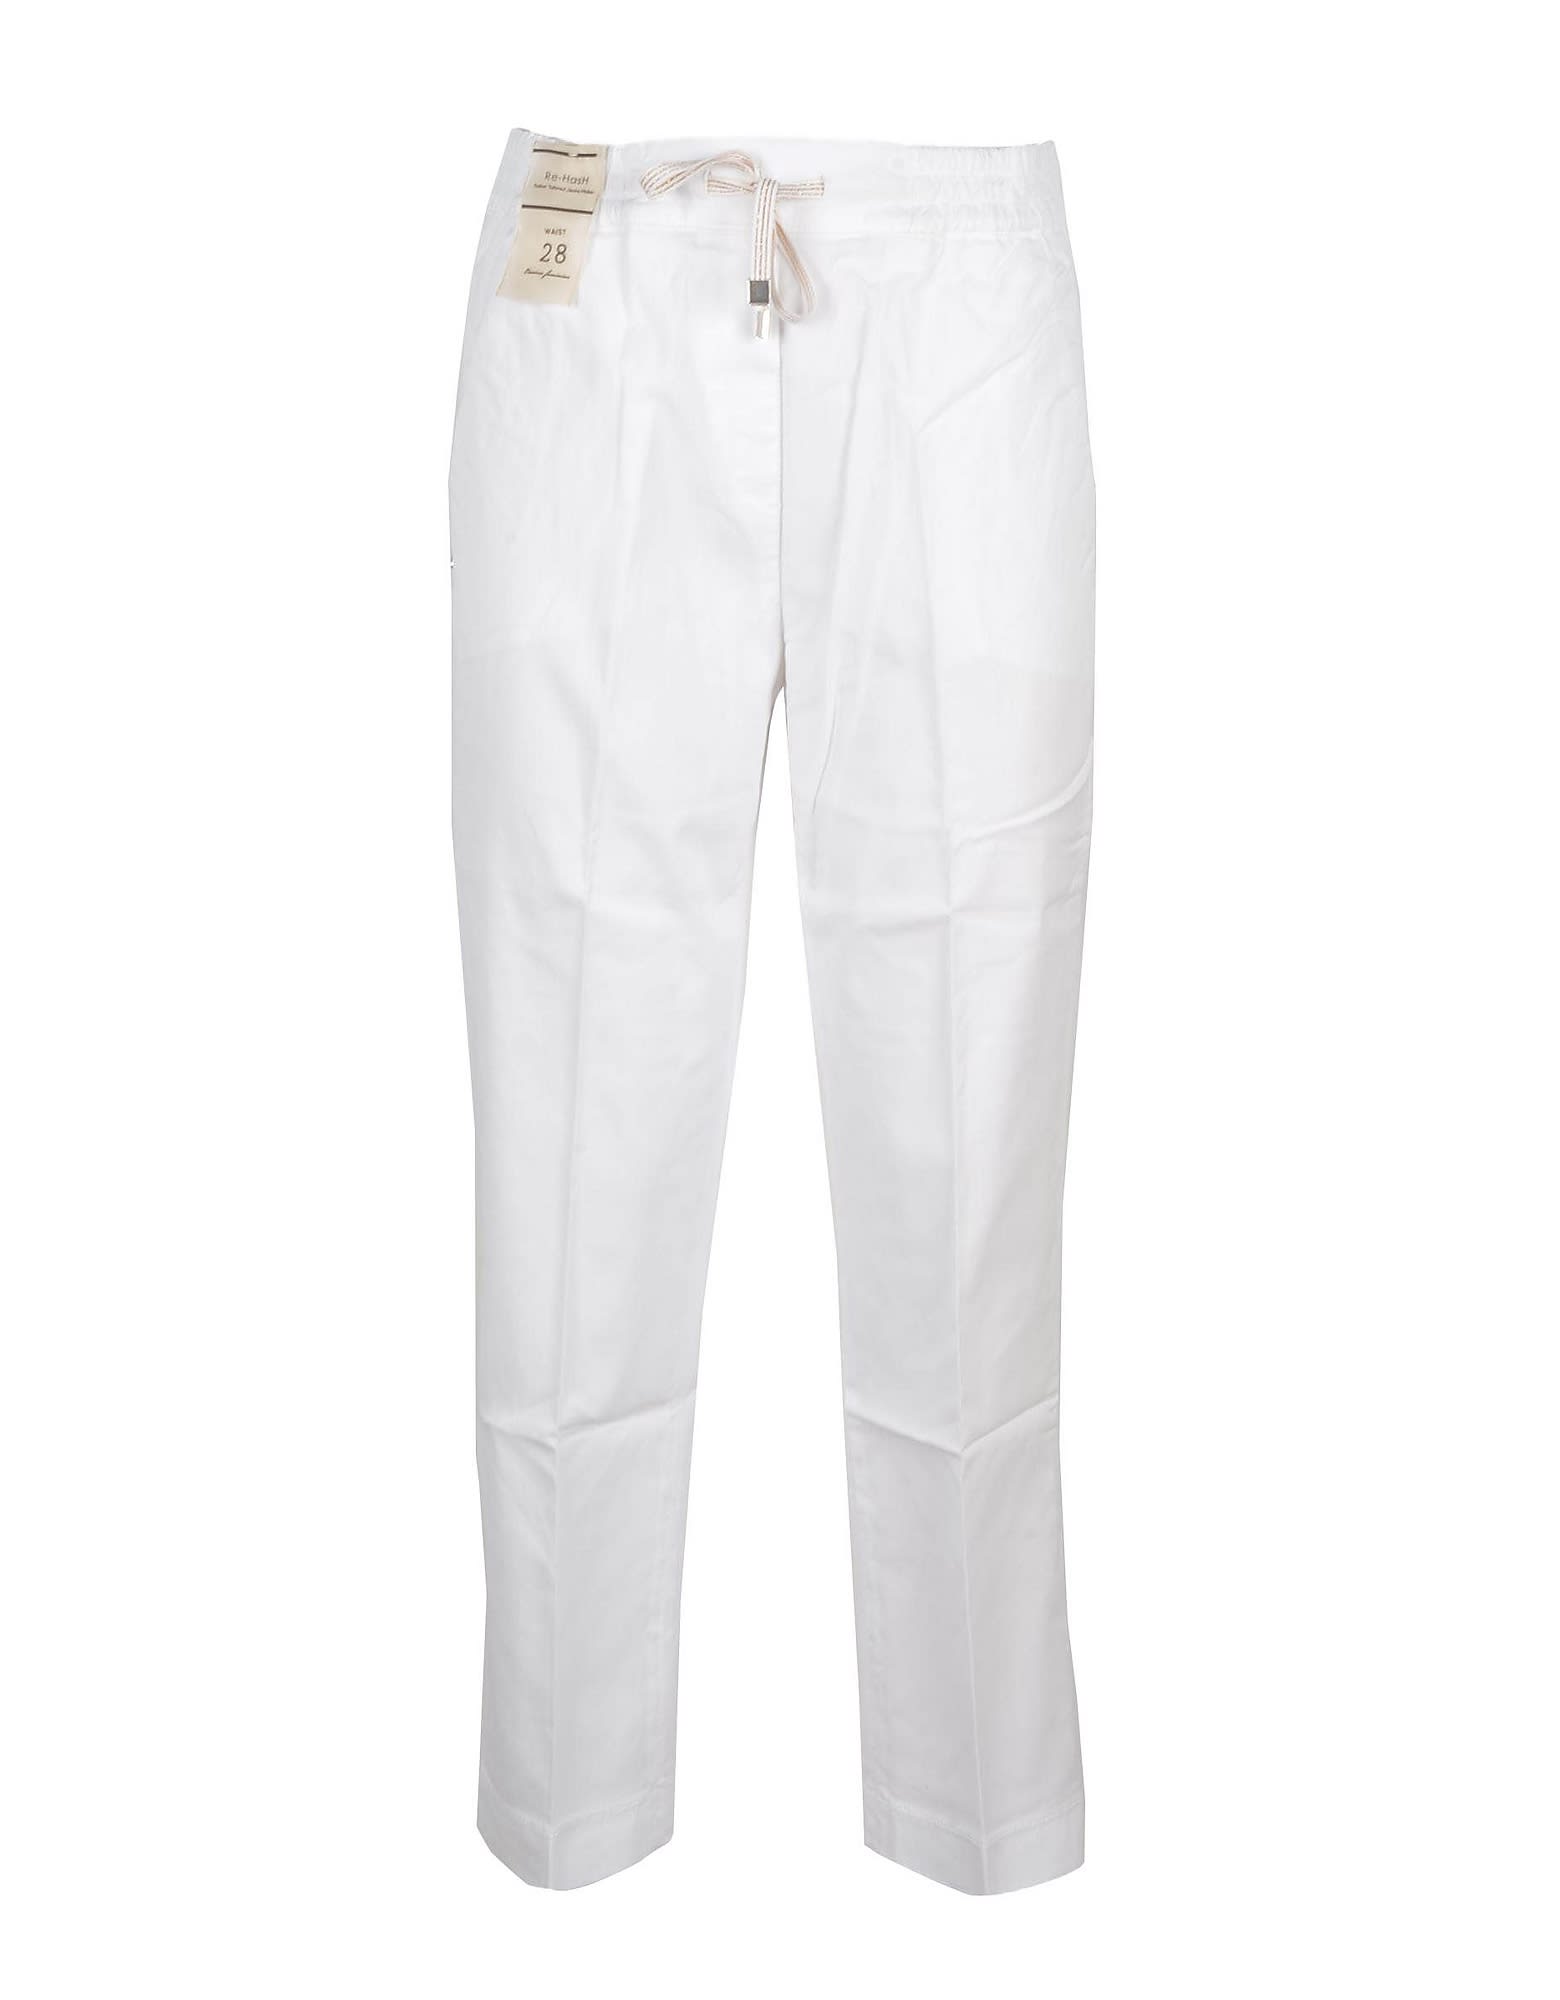 Re-HasH Womens White Pants